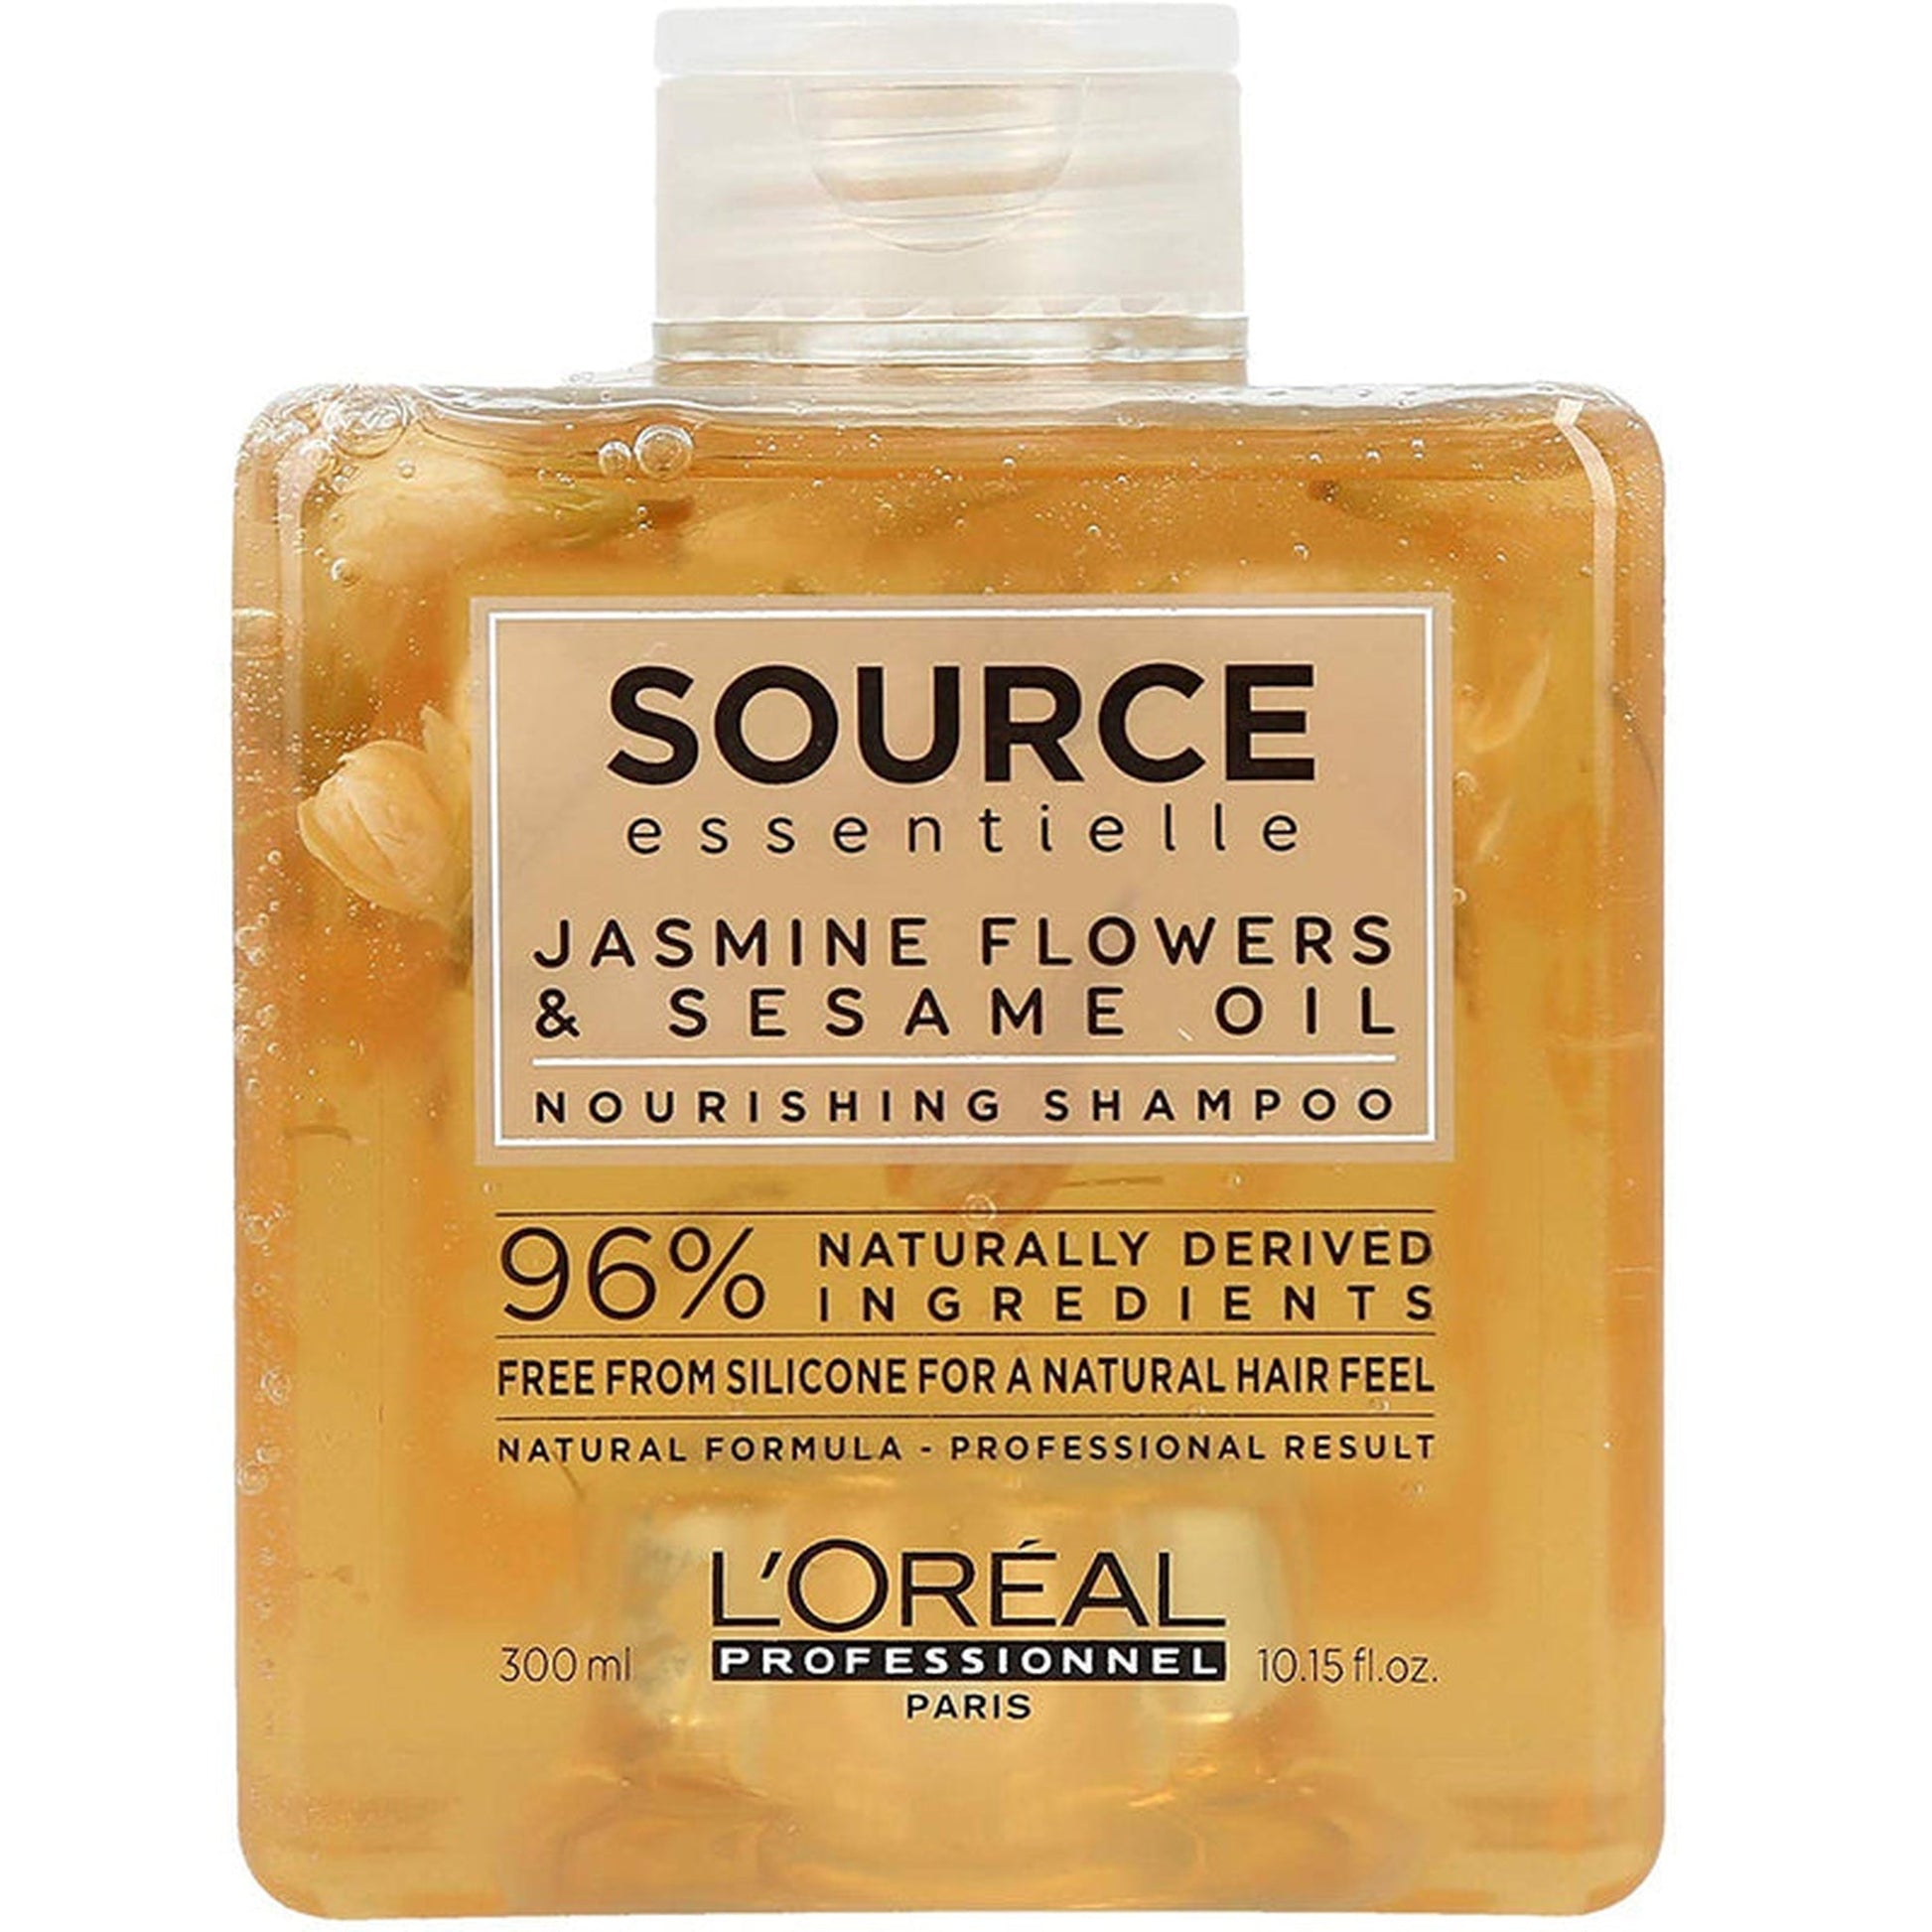 Loreal Professional Source Essentielle Nourishing Shampoo 300mL-L'Oreal-BeautyNmakeup.co.uk